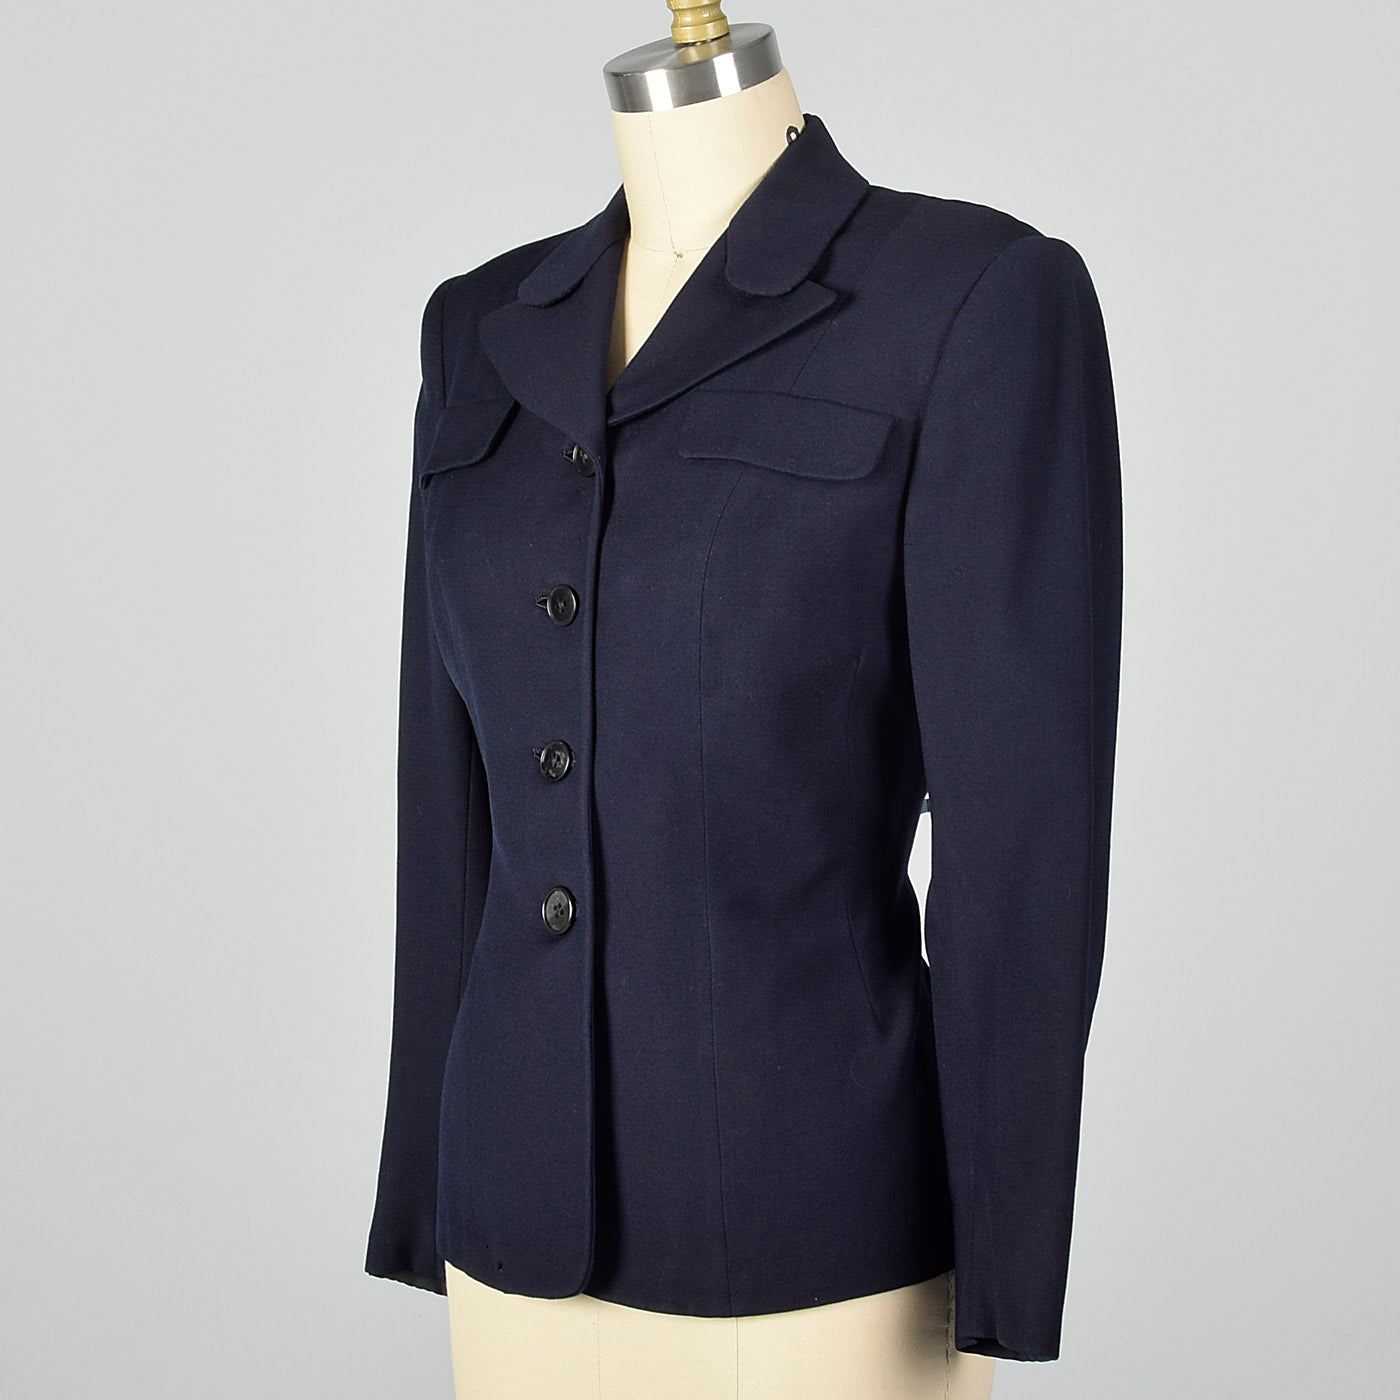 1950s Waves US Navy Military Wool Jacket in Navy Blue